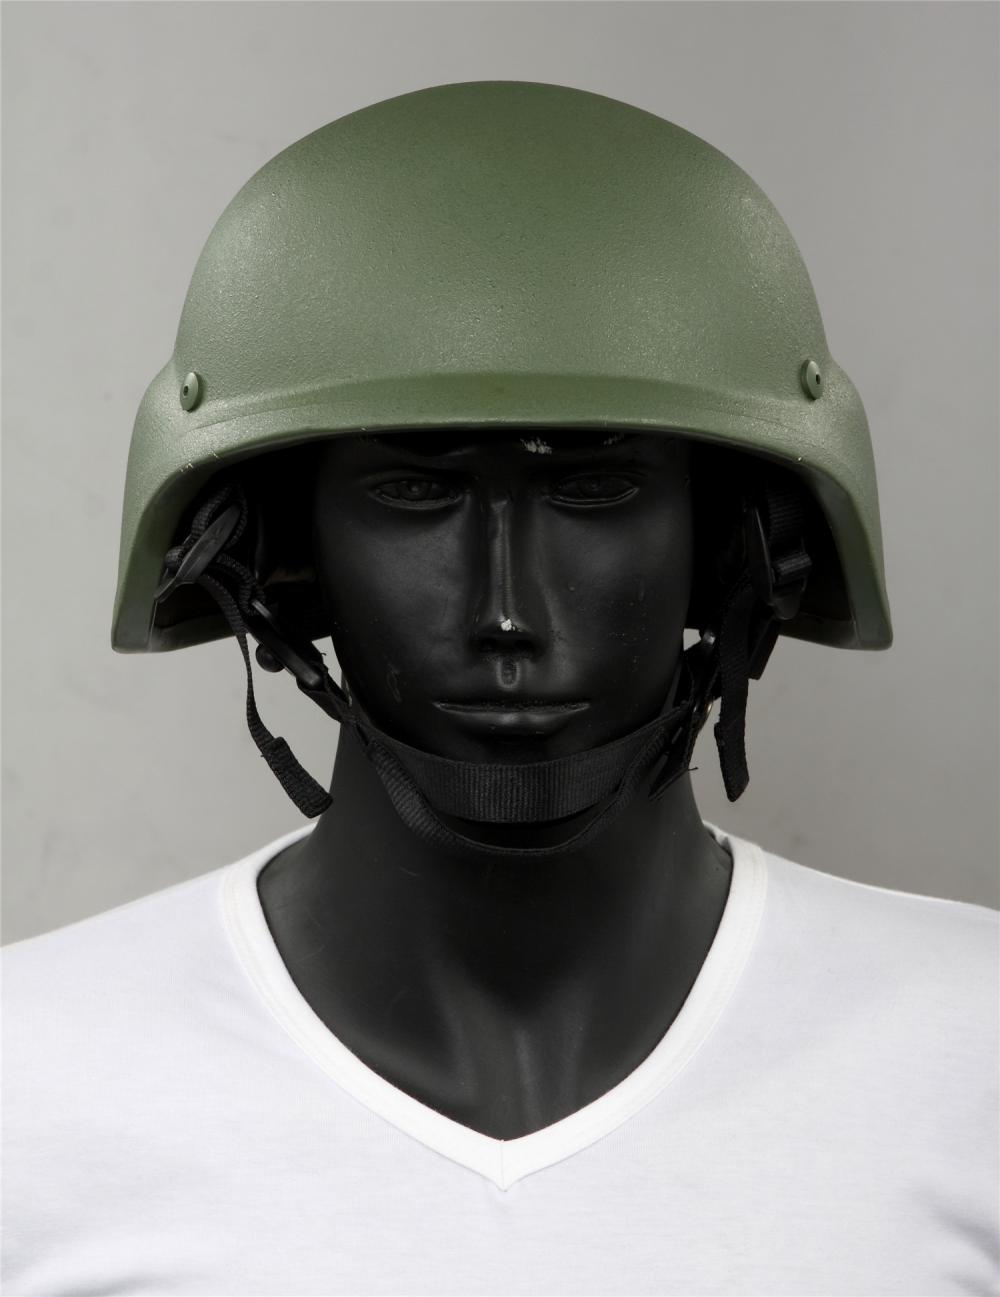 American Pasgt Bulletproof Helmet No Cover